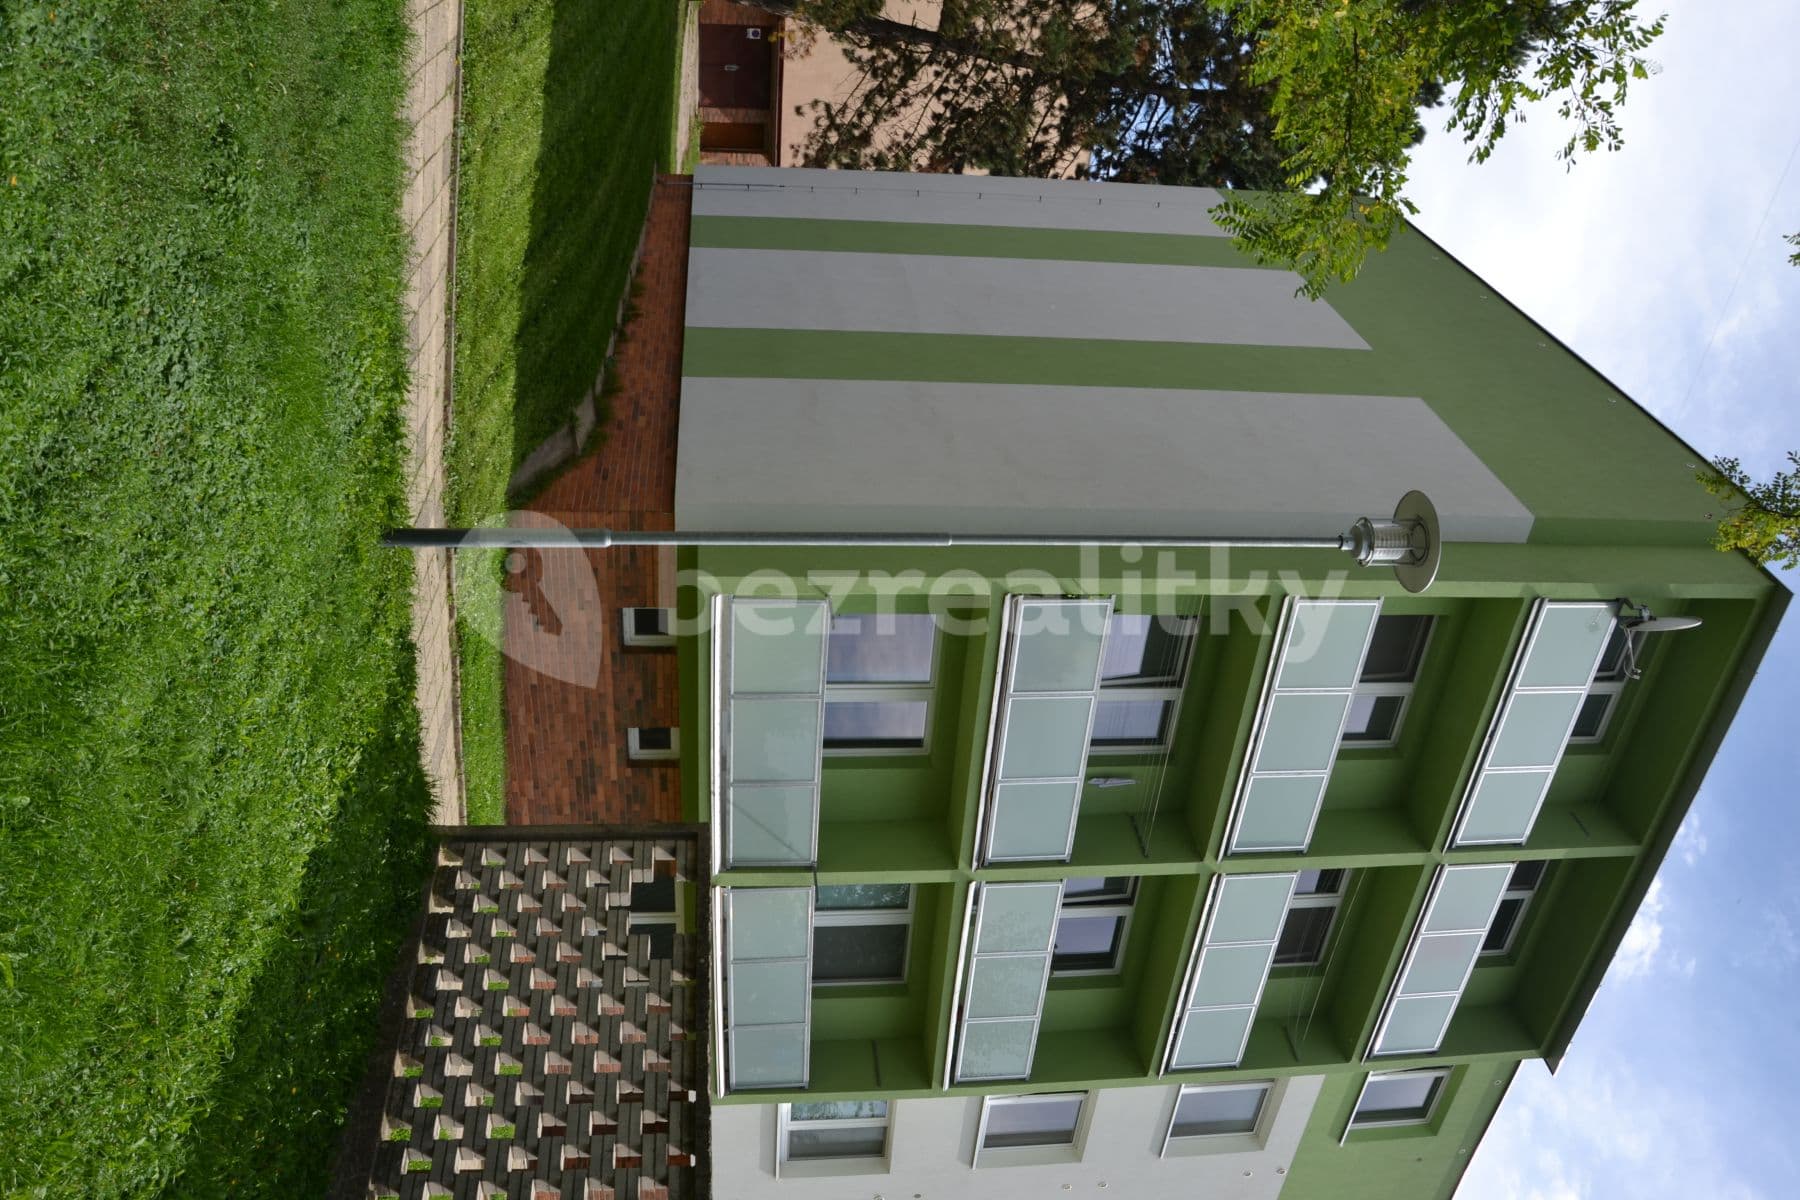 2 bedroom flat to rent, 65 m², Zbýšov, Jihomoravský Region